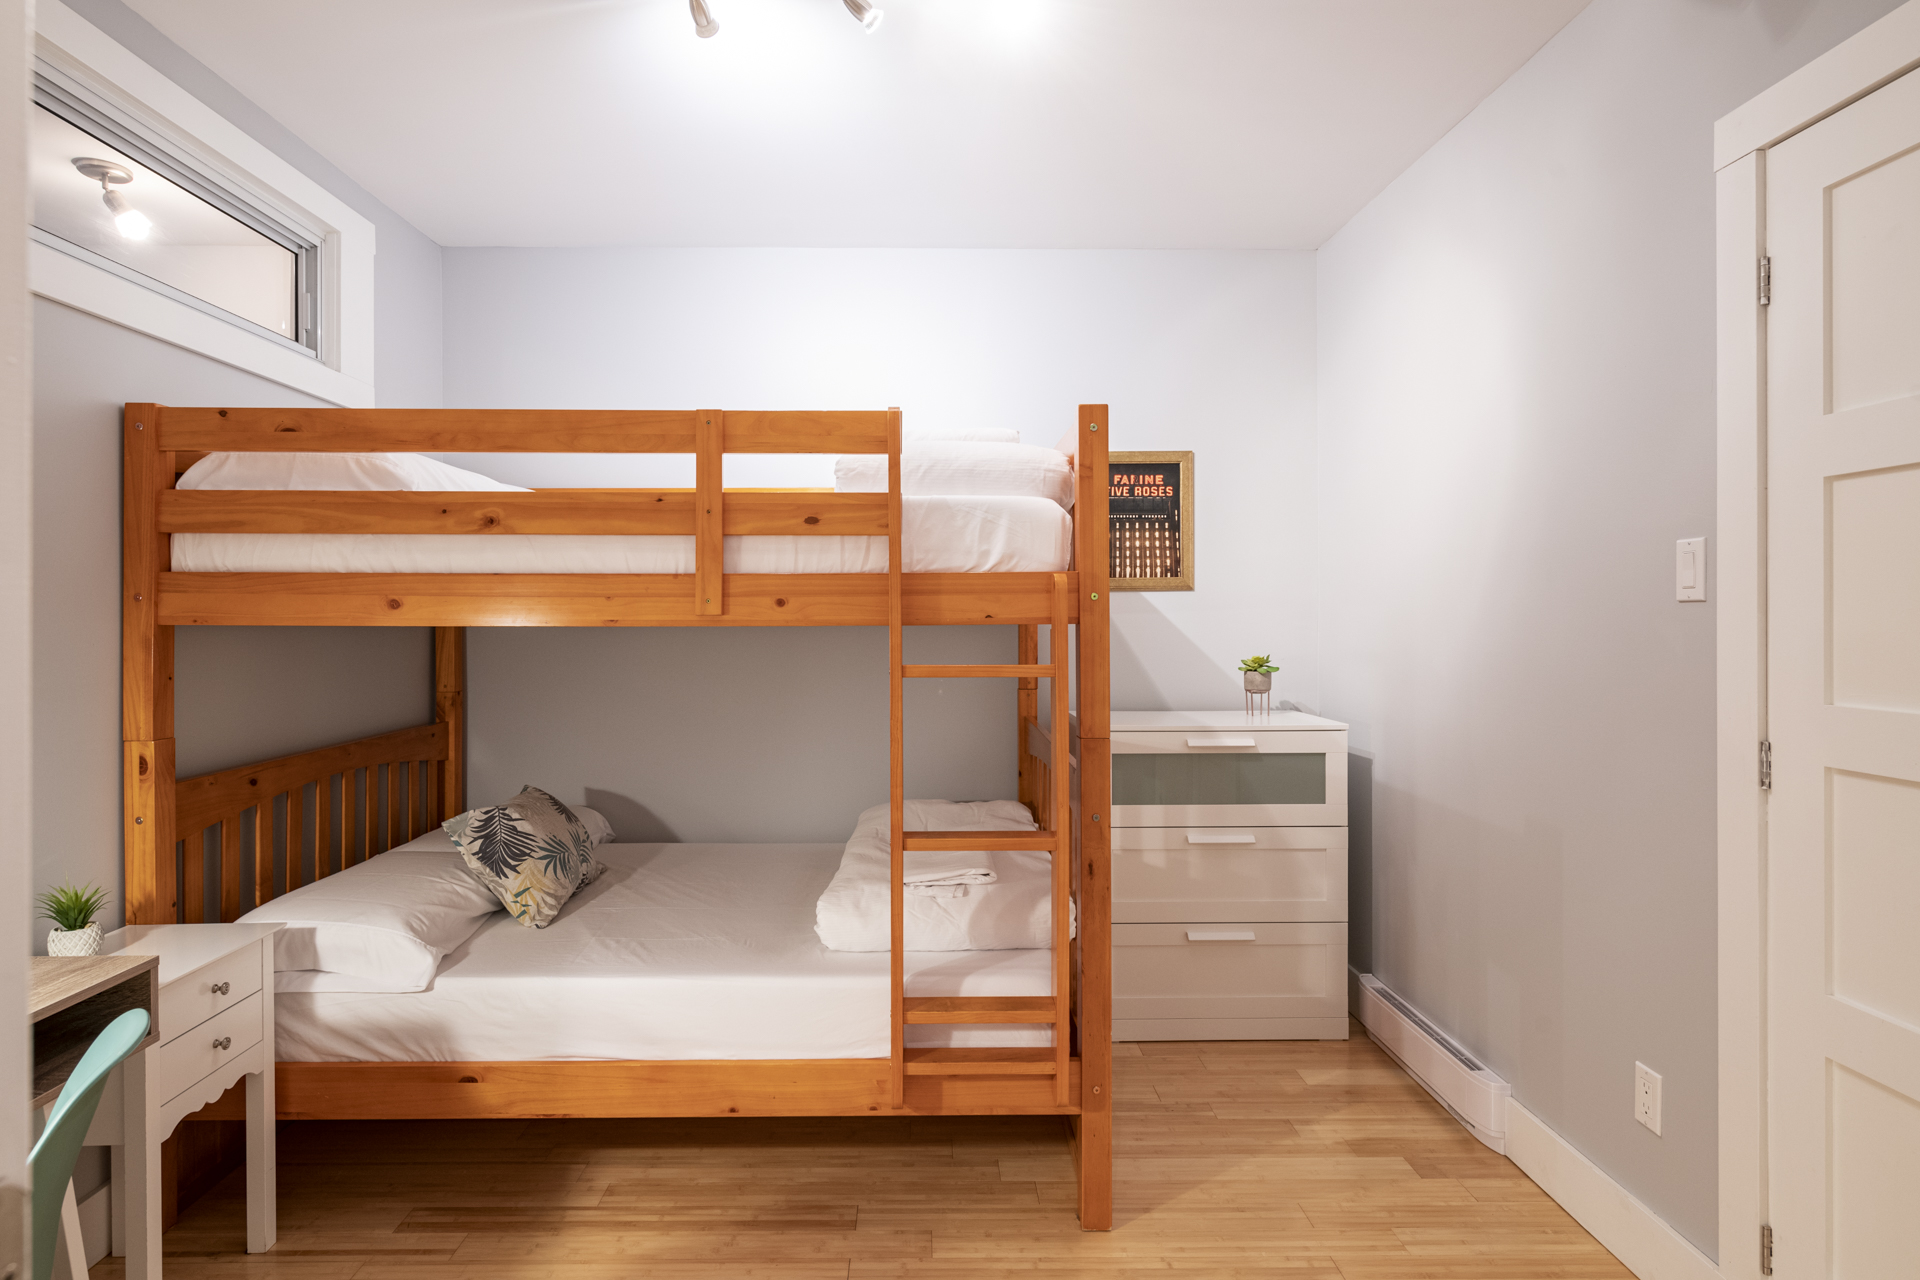 Cozy Laurier: bedroom #3, double/double bunkbed with memory foam mattresses, work desk